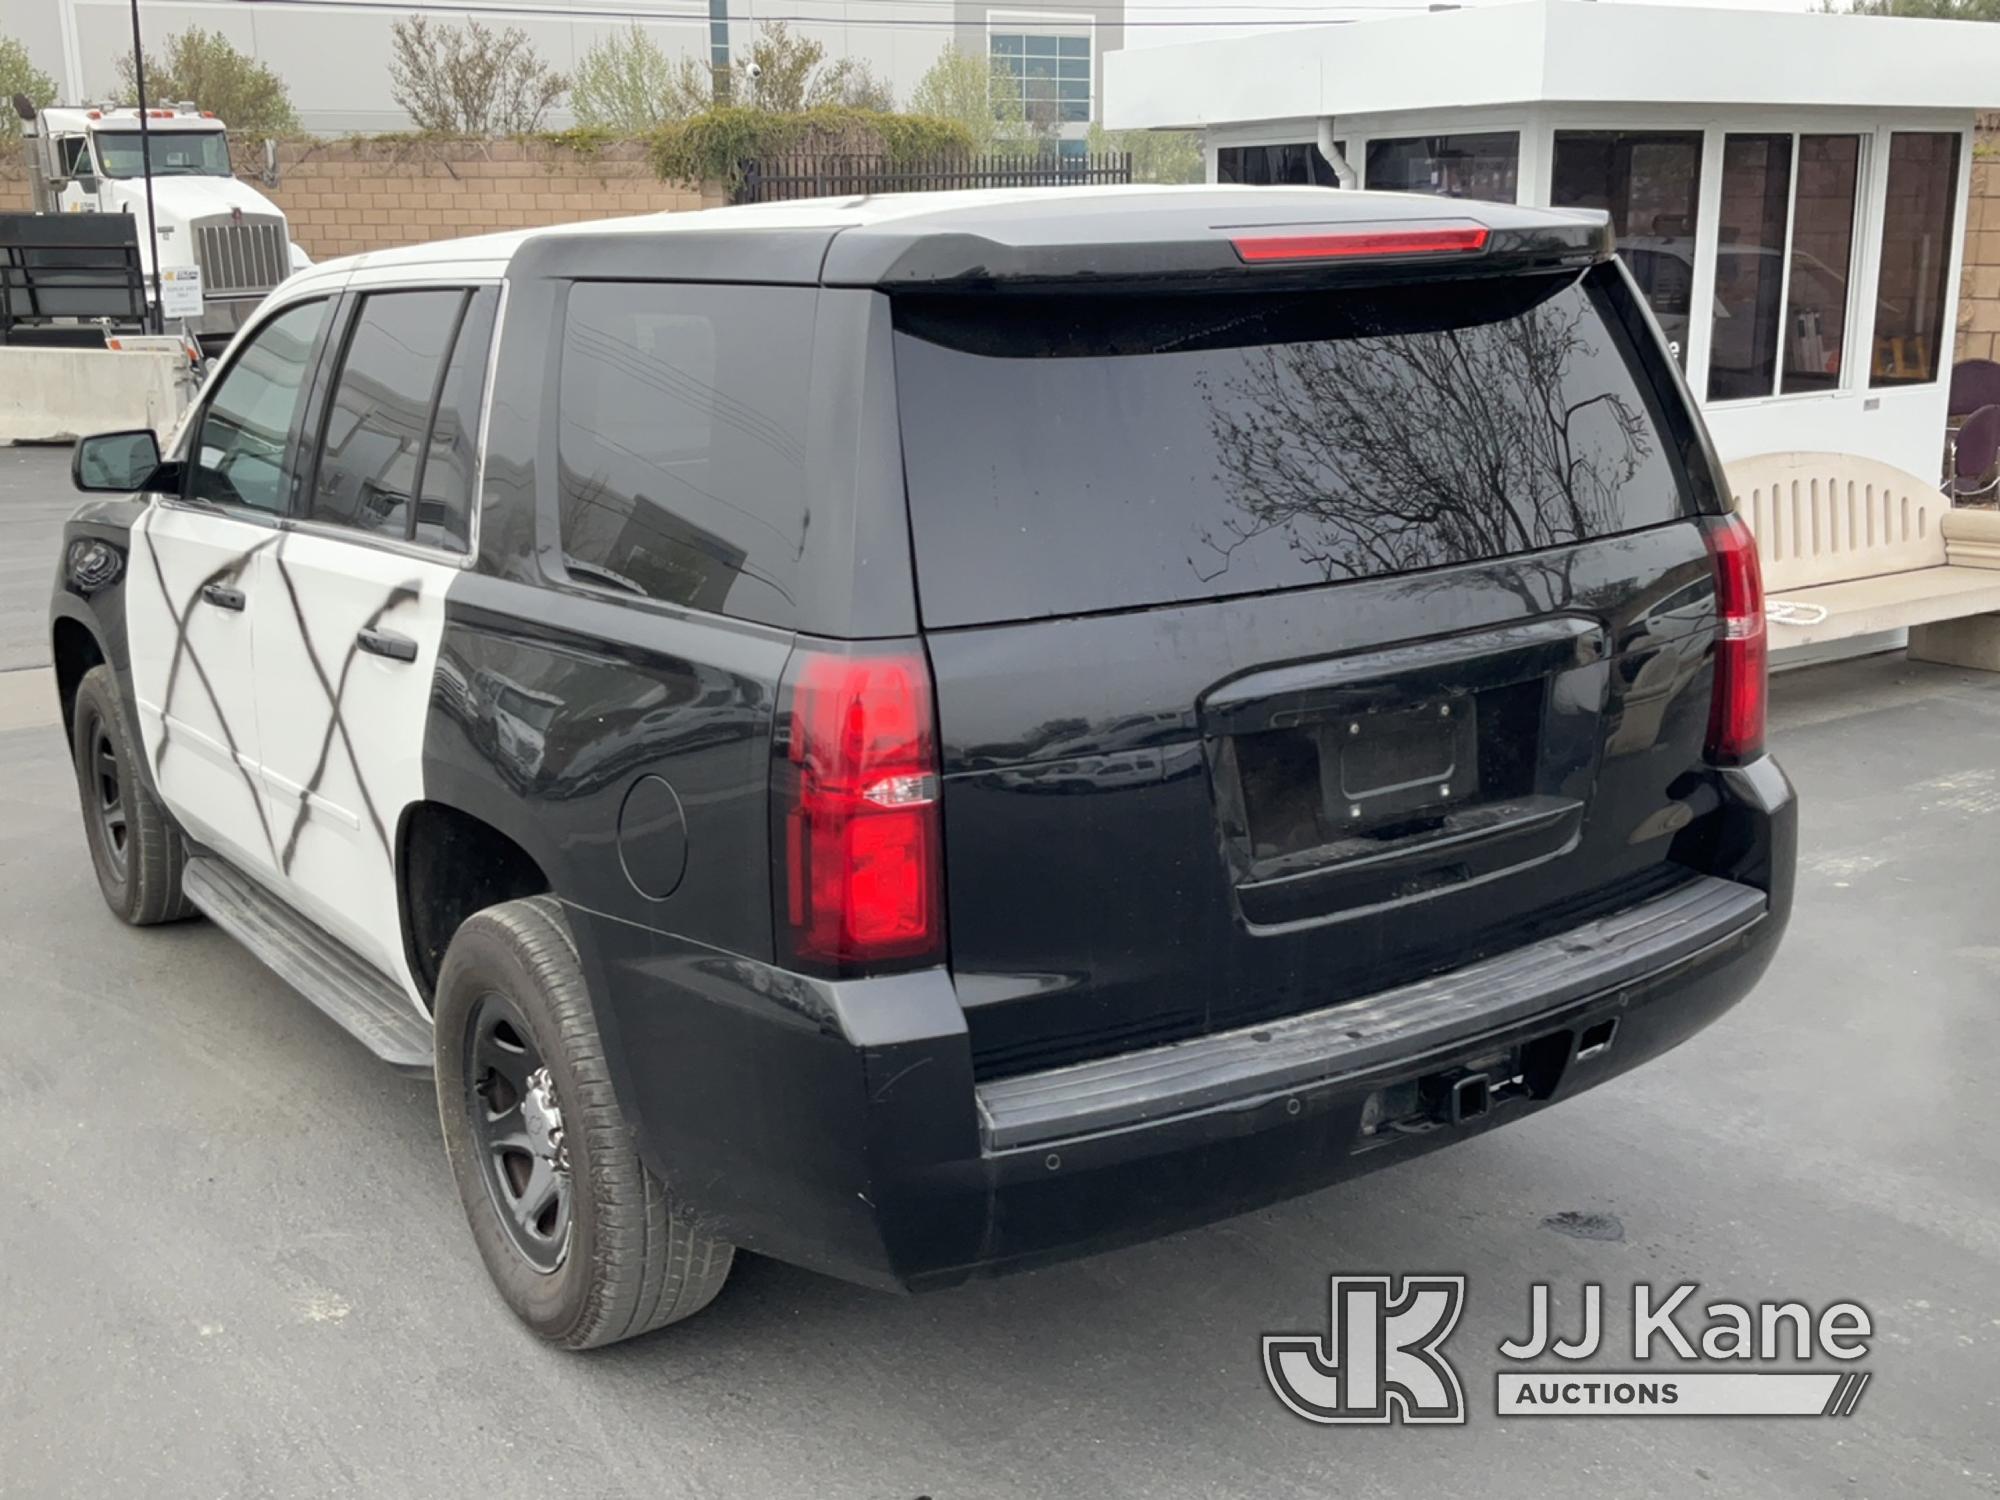 (Jurupa Valley, CA) 2015 Chevrolet Tahoe Police Package Sport Utility Vehicle Runs & Moves, Interior